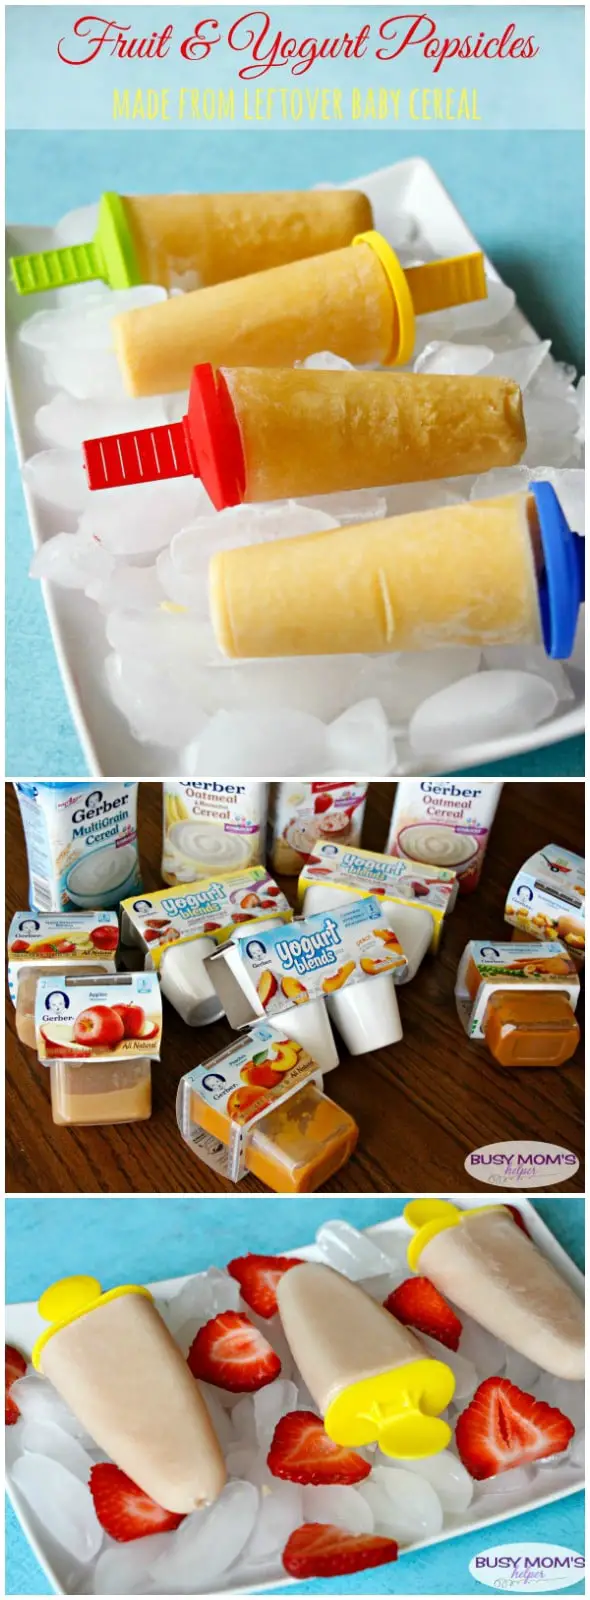 Fruit & Yogurt Homemade Popsicles using Leftover Baby Food ...